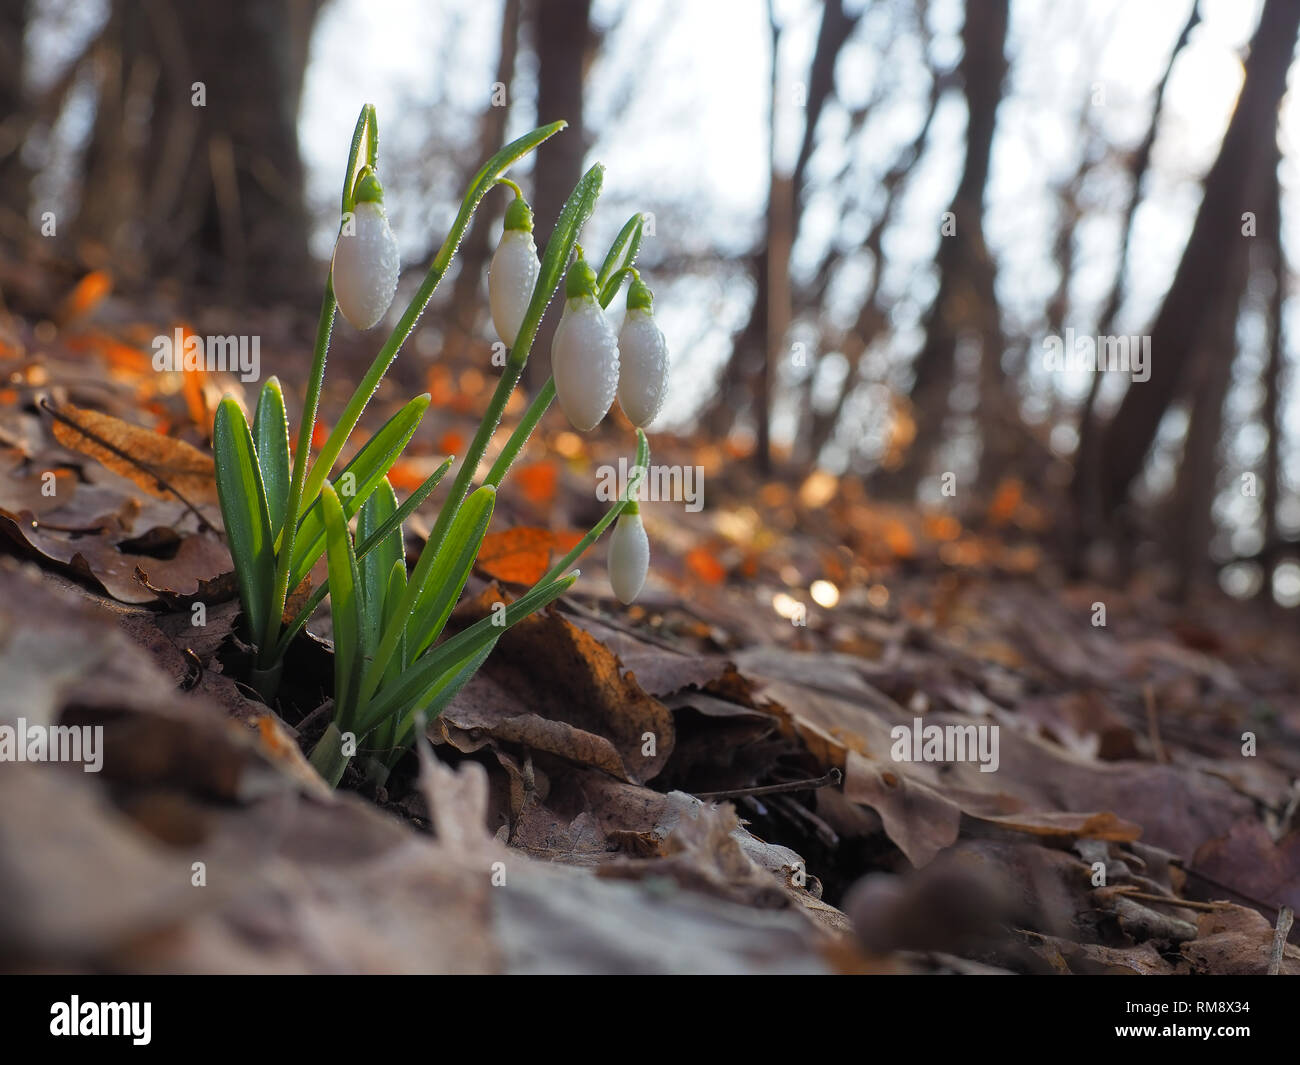 Snowdrop or common snowdrop (Galanthus nivalis) flowers Stock Photo